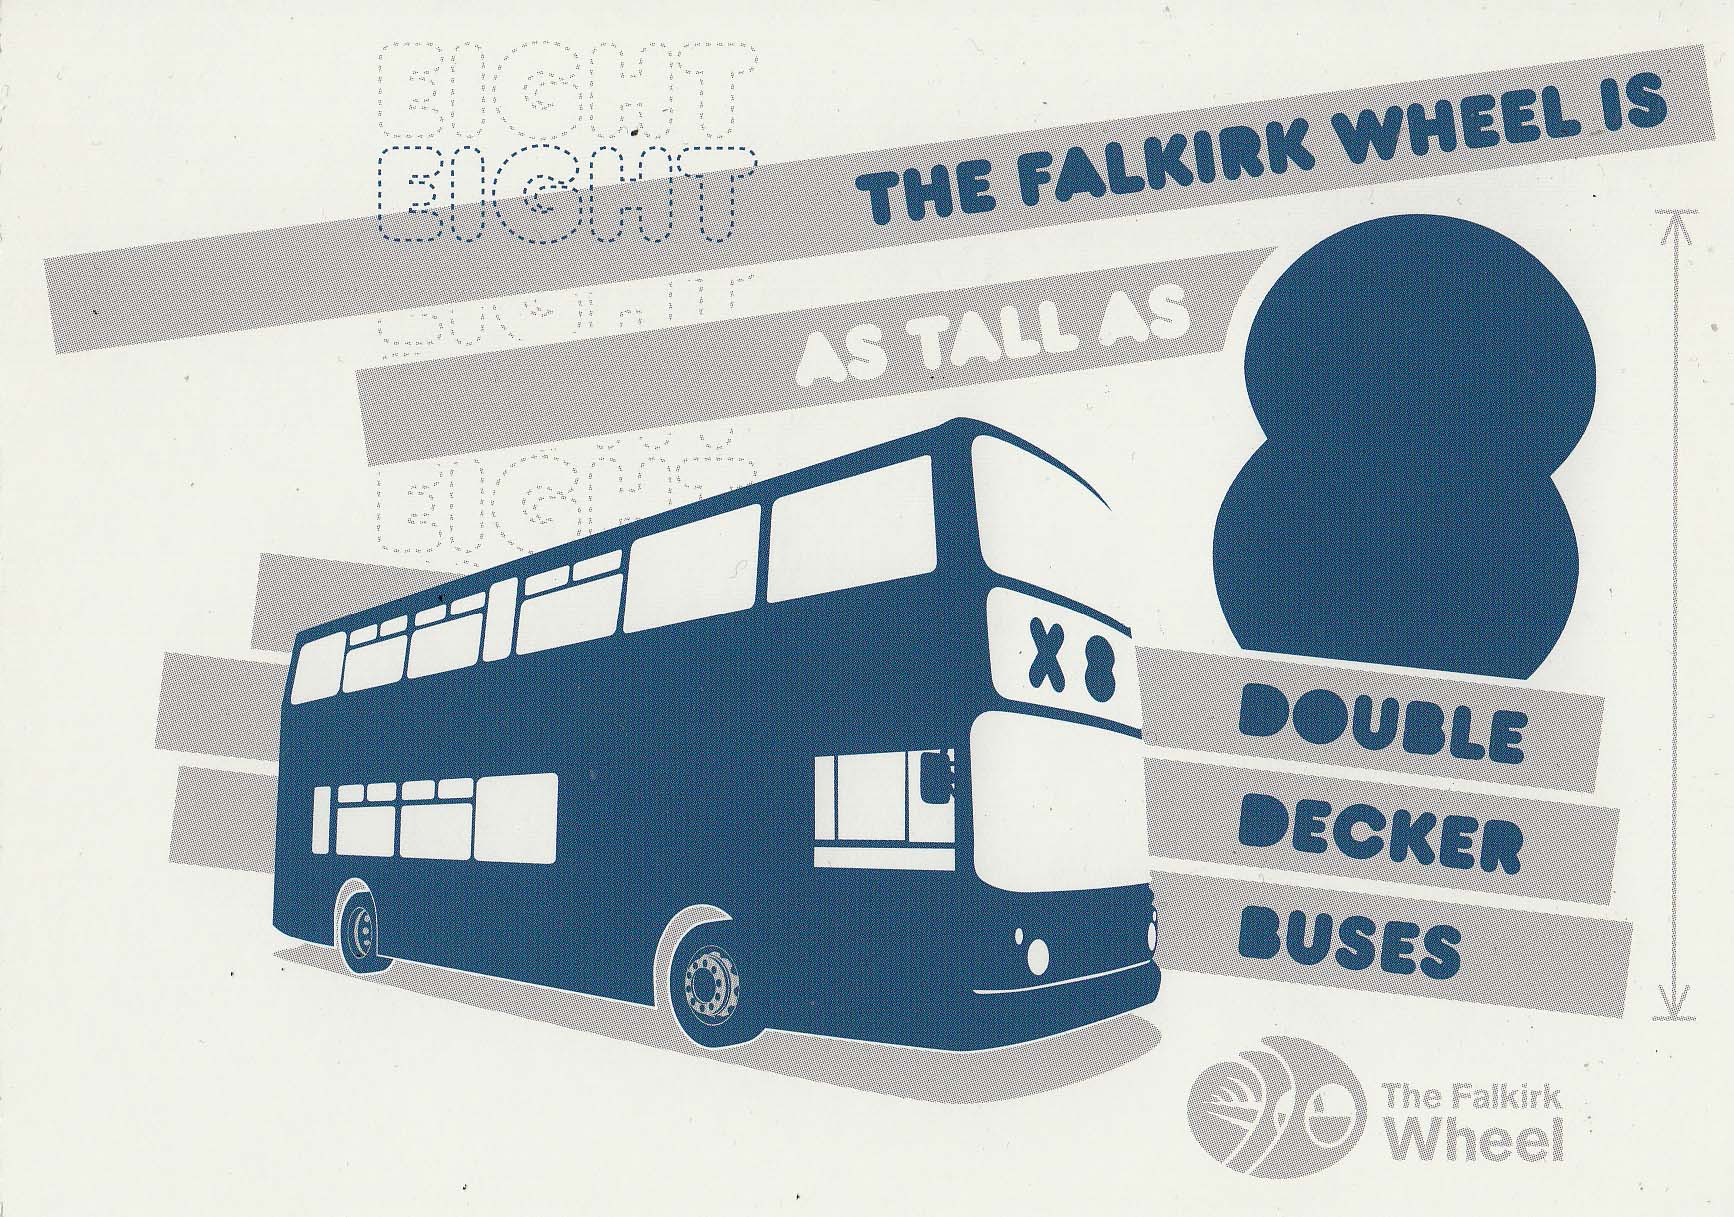 Postcard of the Falkirk Wheel